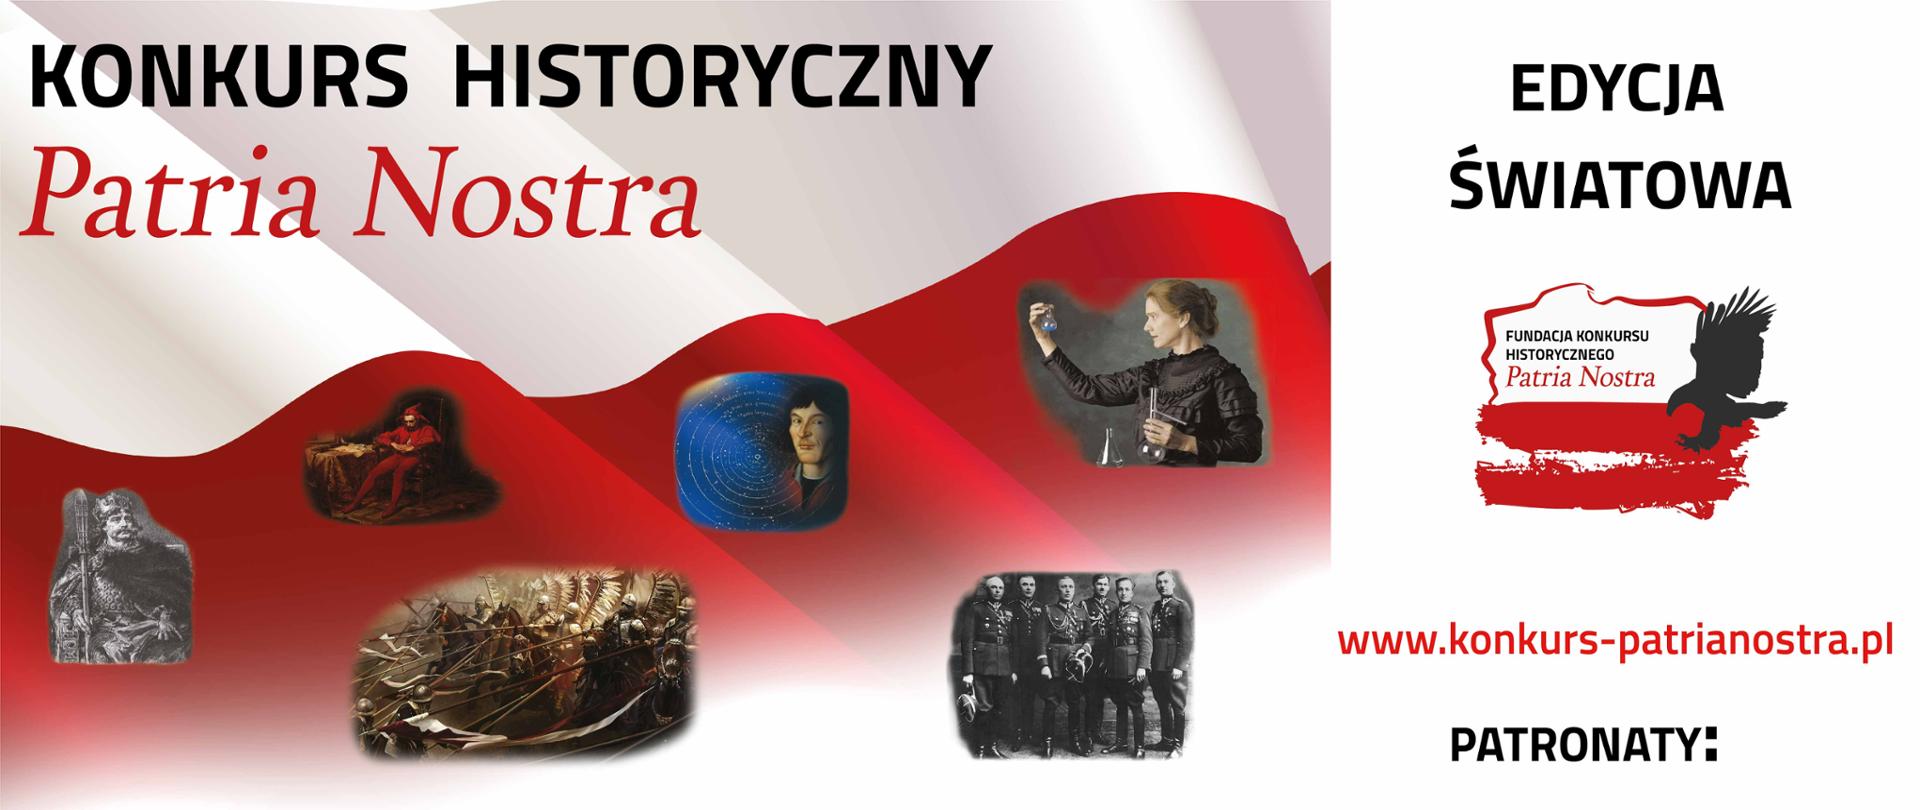 Konkurs historyczny Patria Nostra.